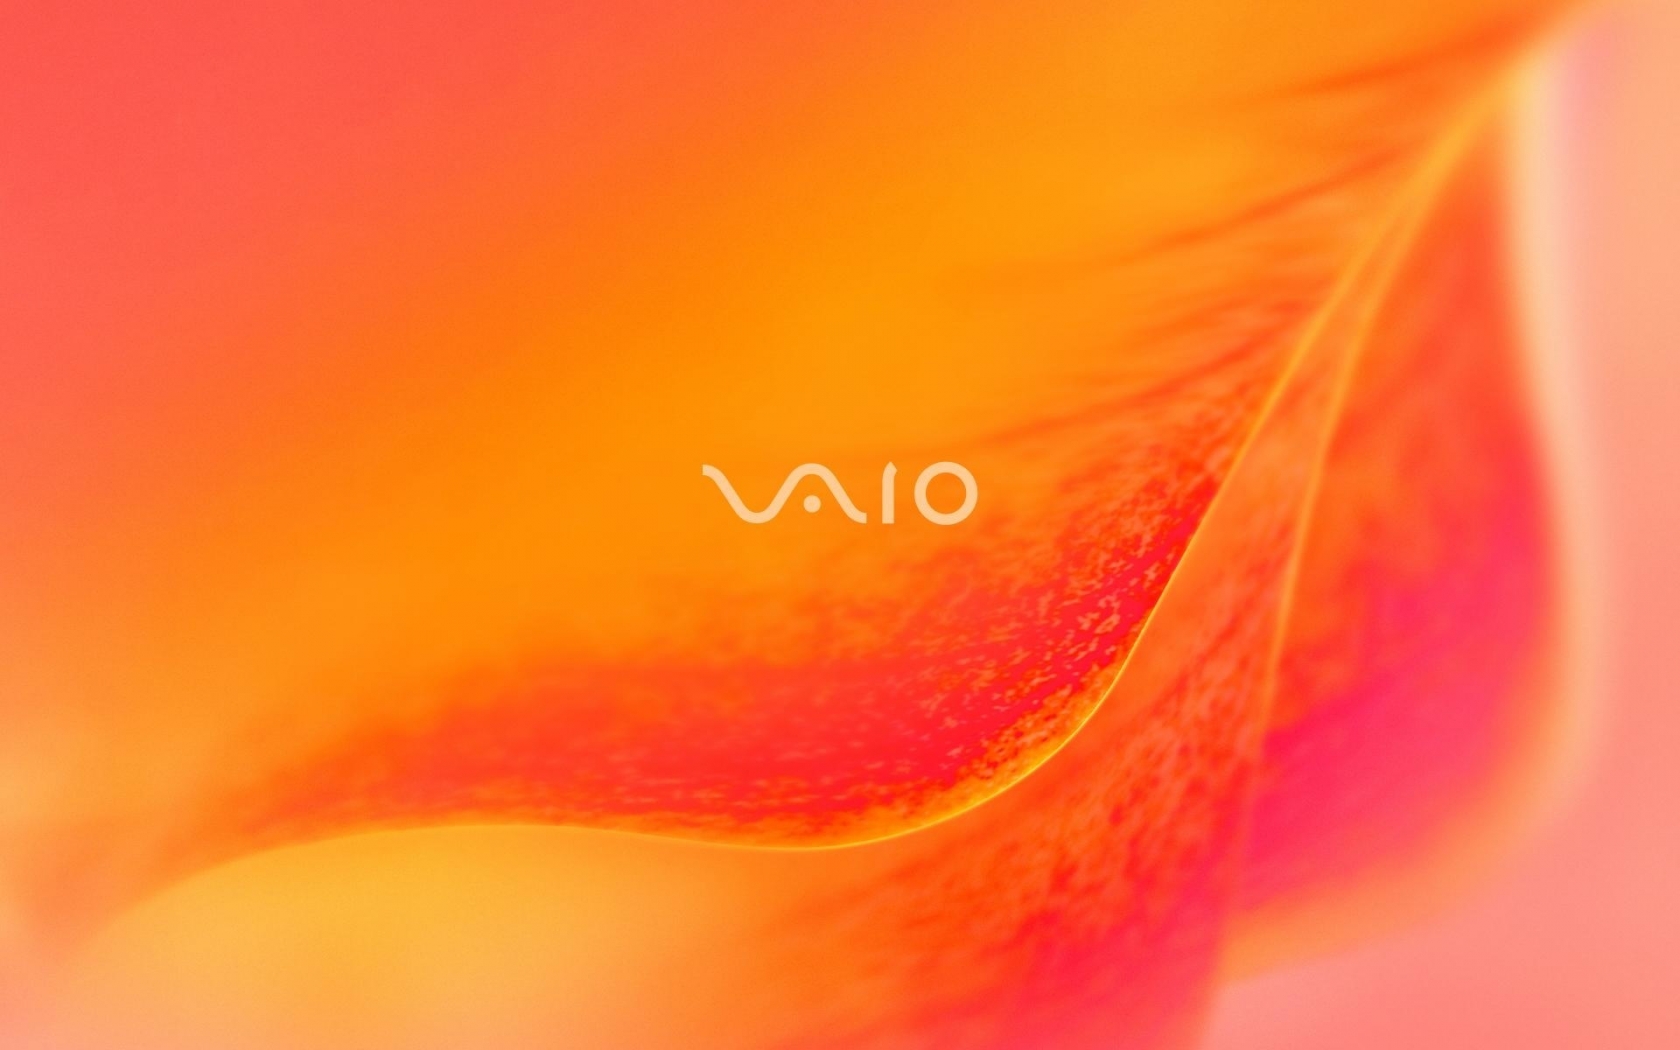 Sony Vaio Orange blossom for 1680 x 1050 widescreen resolution